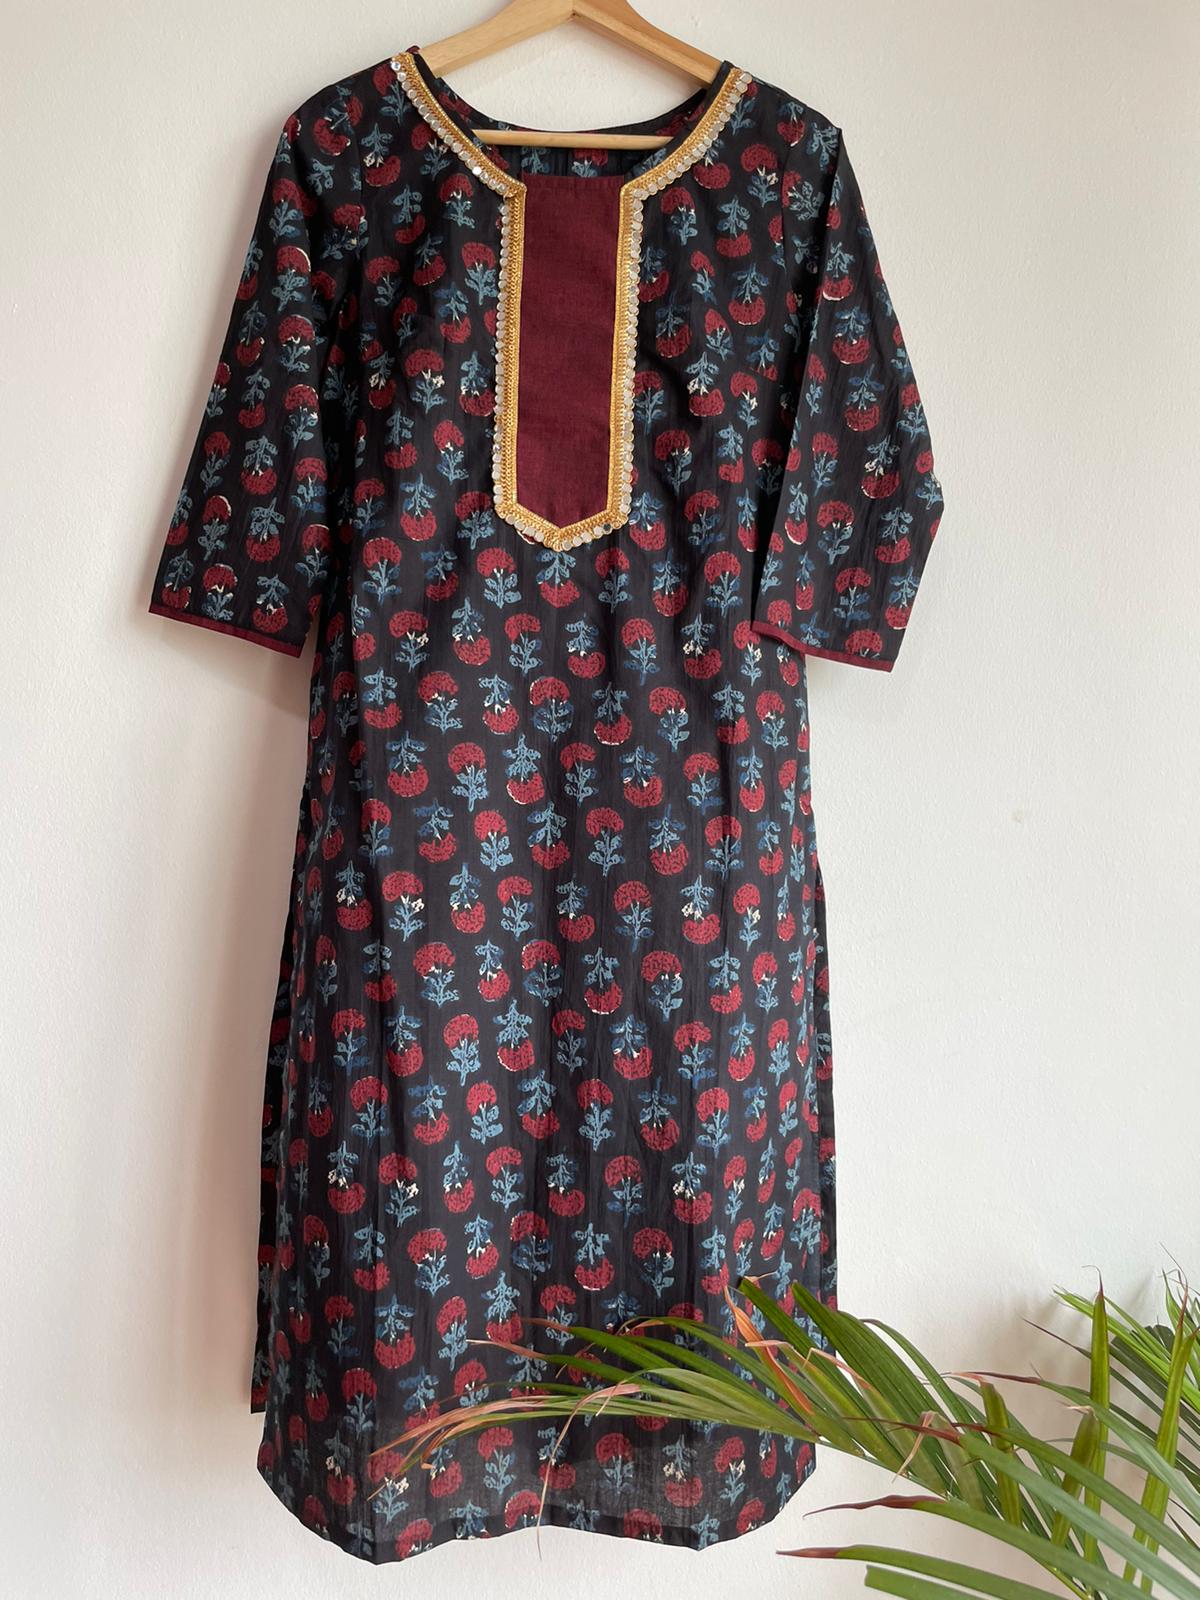 Festive Ethnic wear indian suit set for women in singapore. Shop now